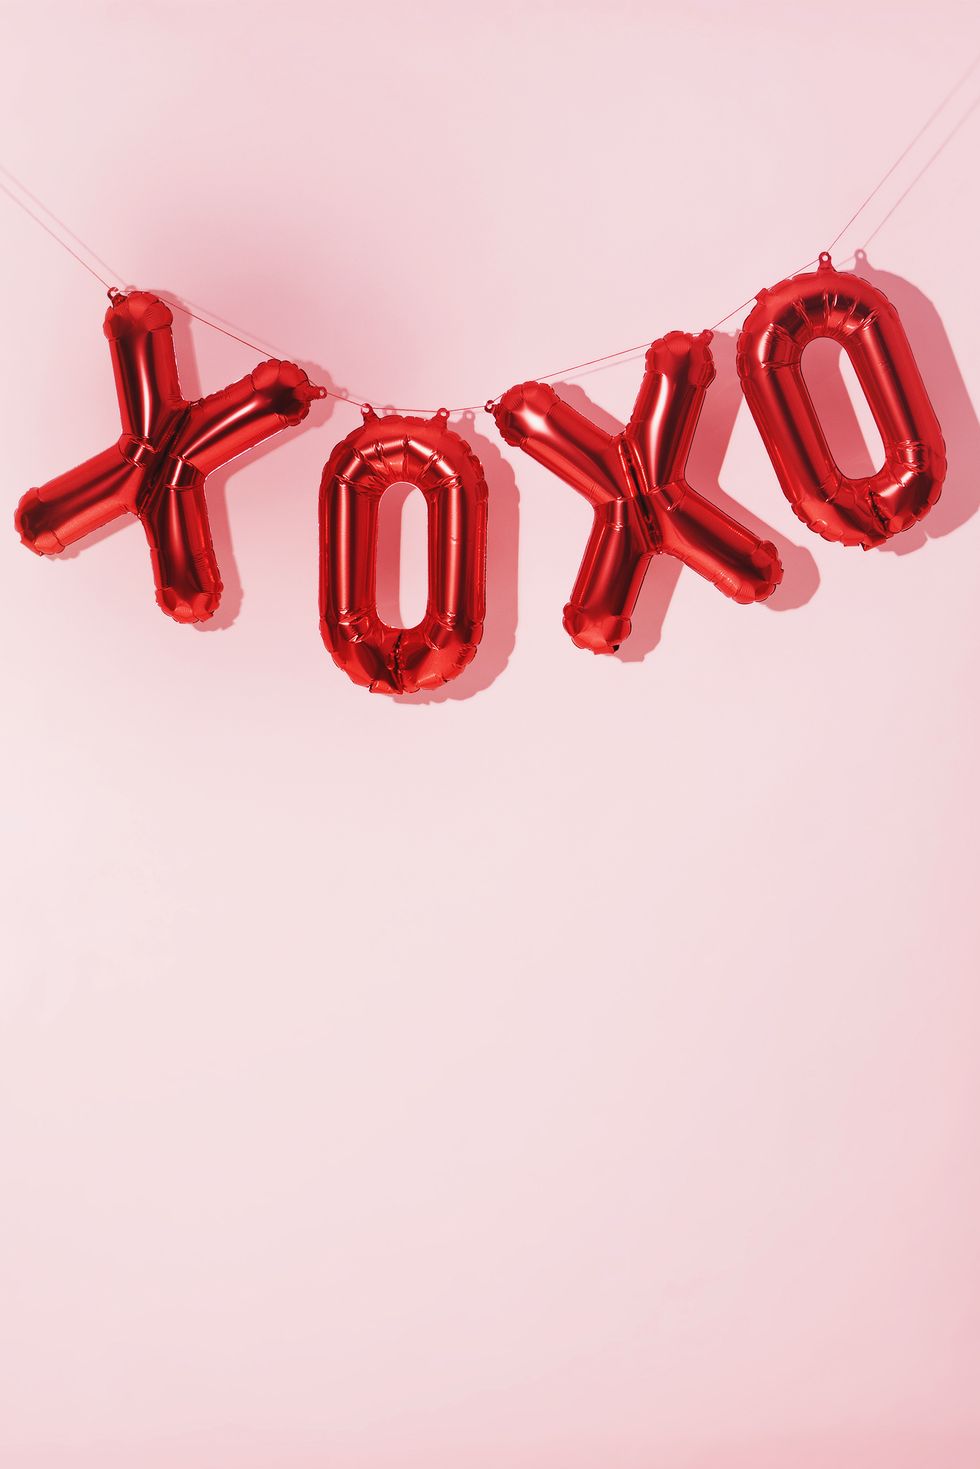 https://hips.hearstapps.com/hmg-prod/images/valentines-day-decor-xoxo-balloons-1575932028.jpg?crop=0.835xw:0.977xh;0.0884xw,0.00664xh&resize=980:*